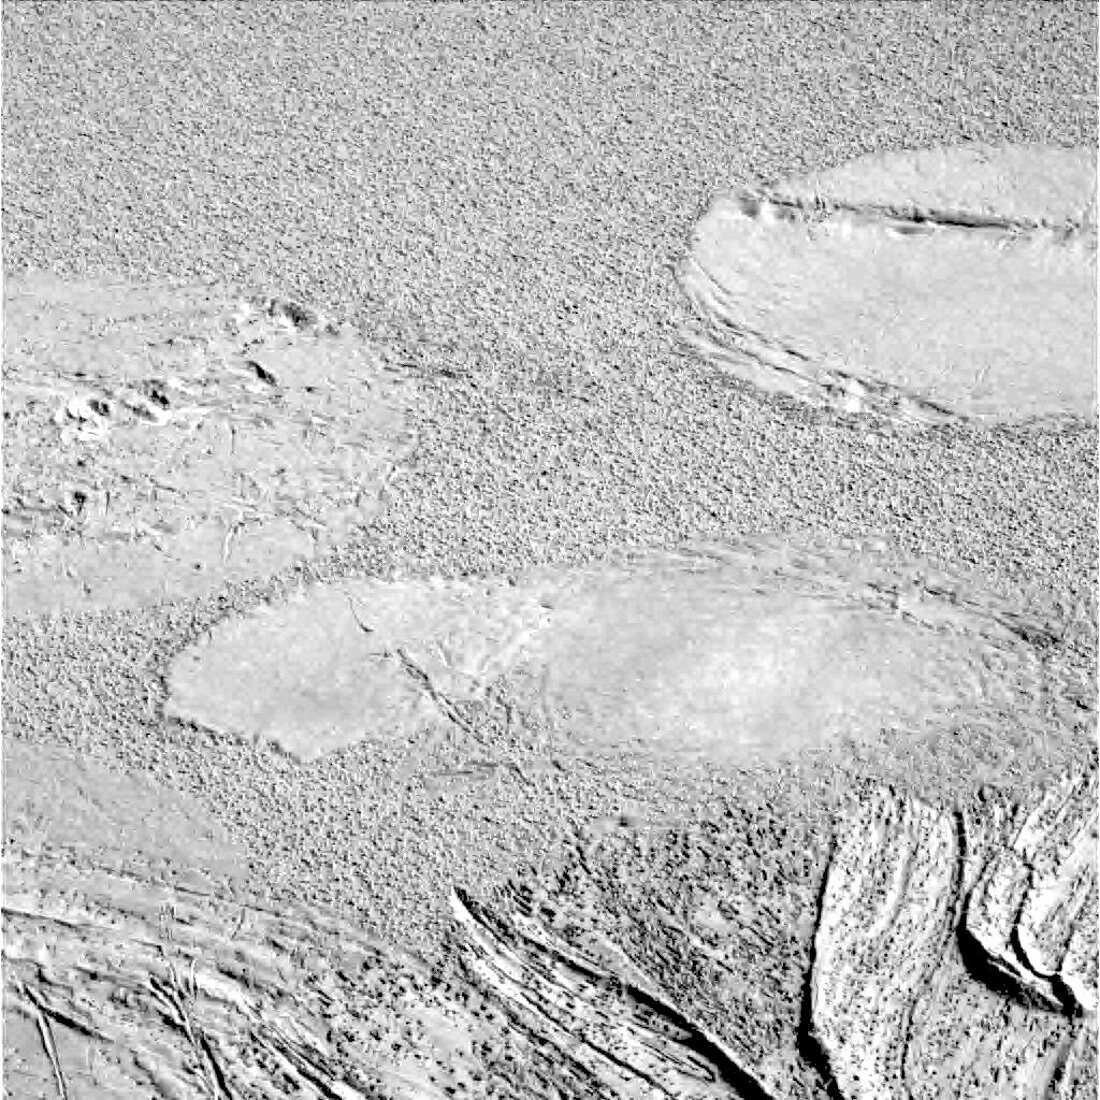 Mars rover airbag marks